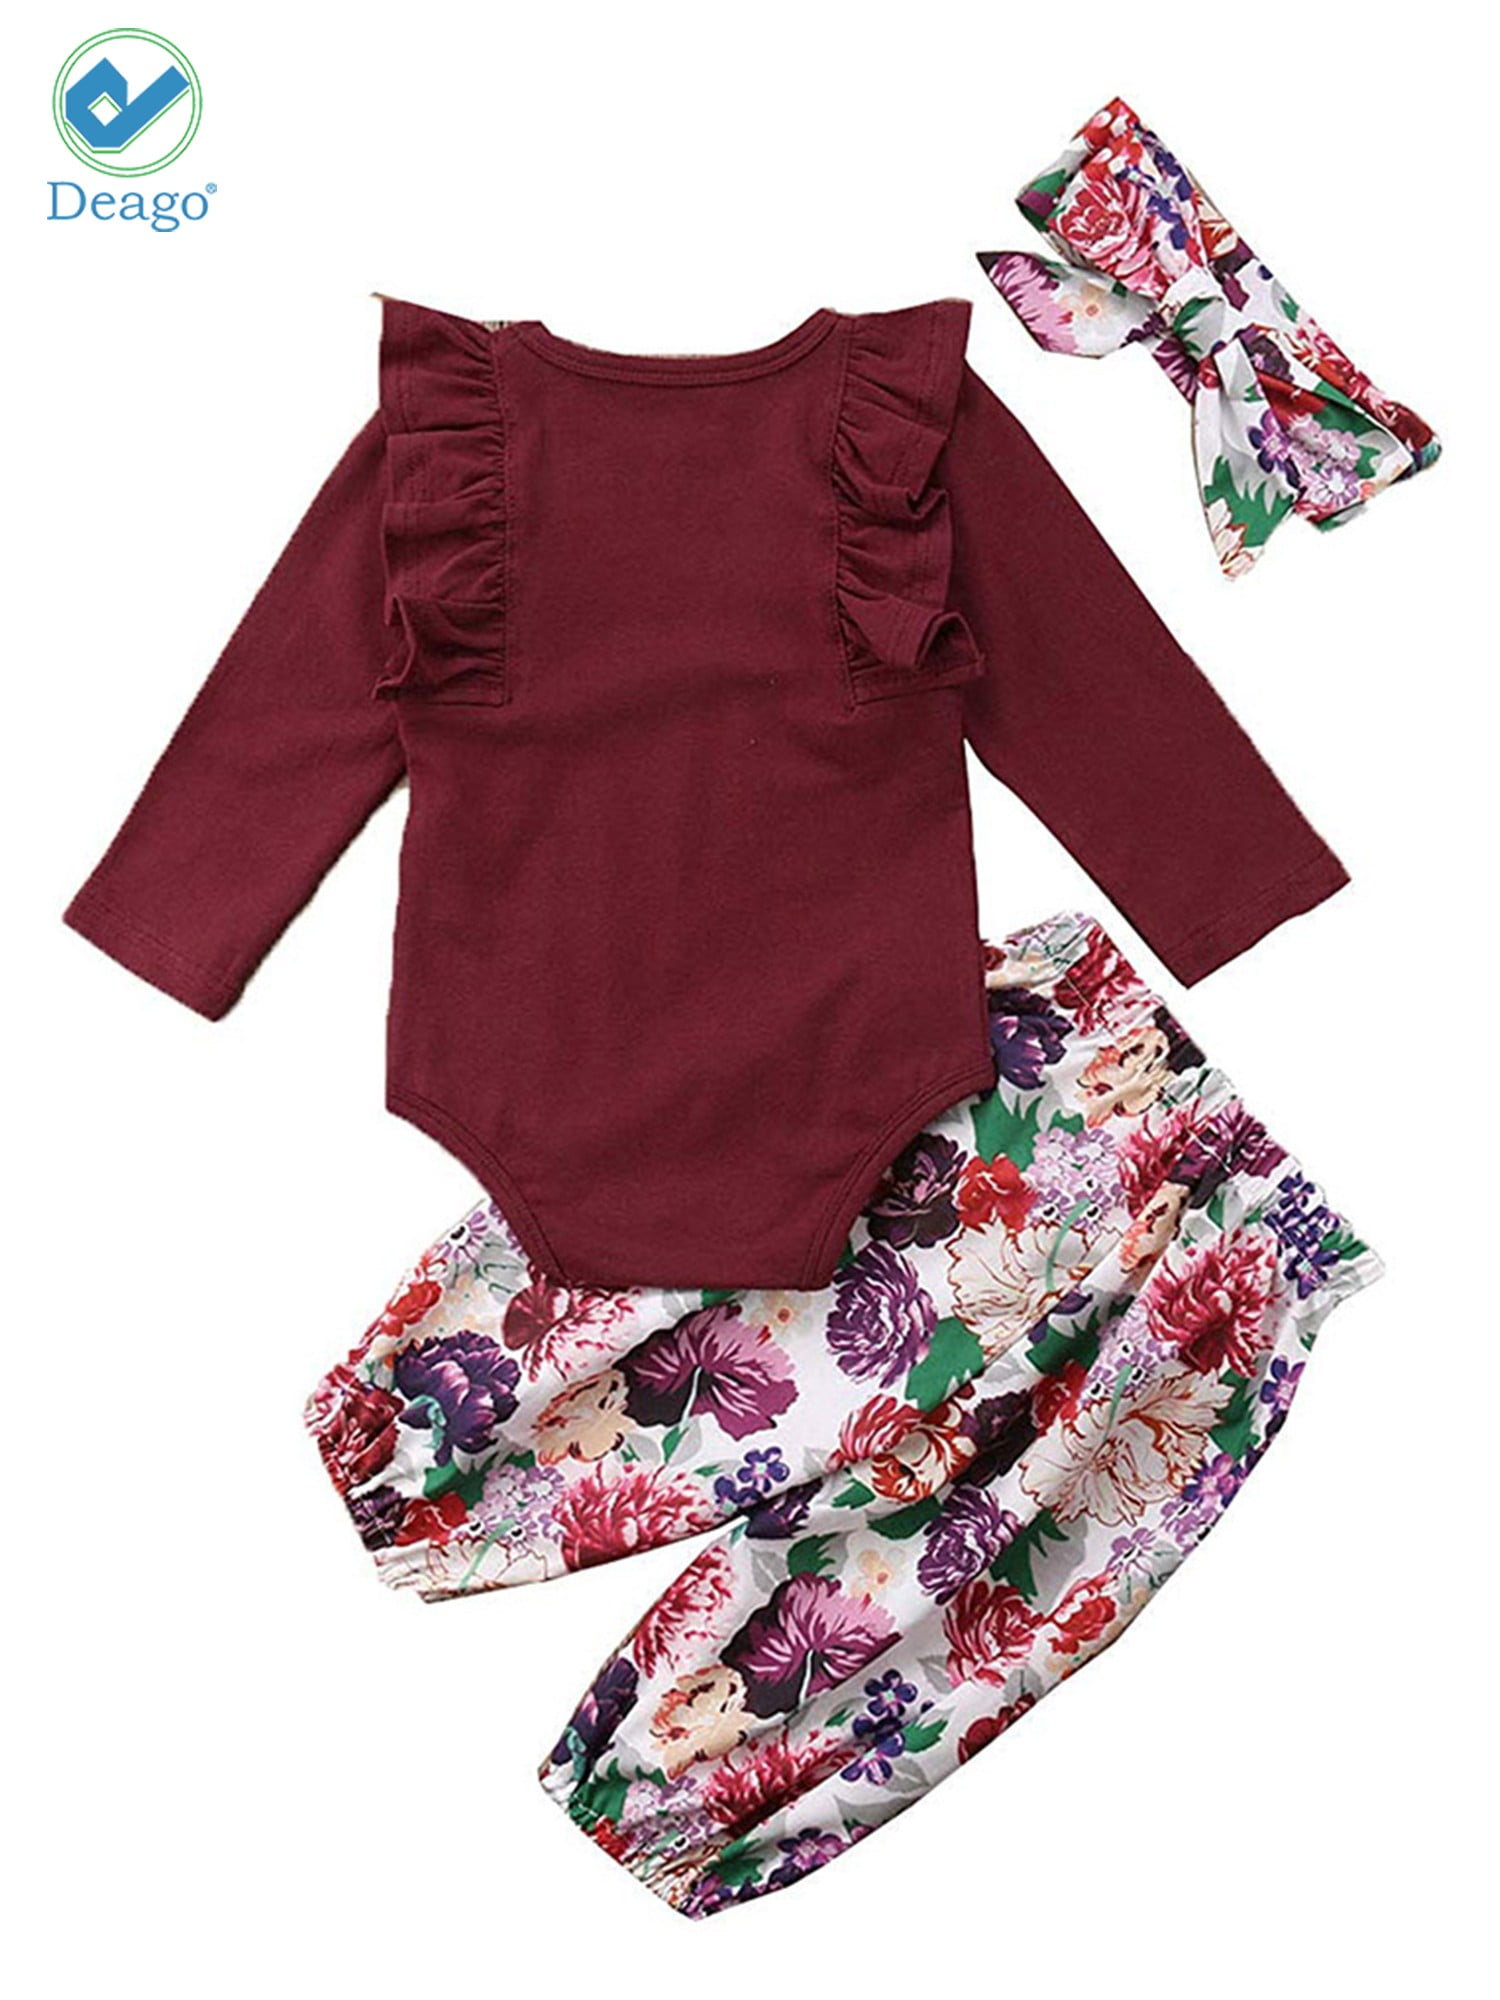 4PCS Newborn Baby Girl Tops Romper Floral PantsHeadband Outfits Gift C3J3 